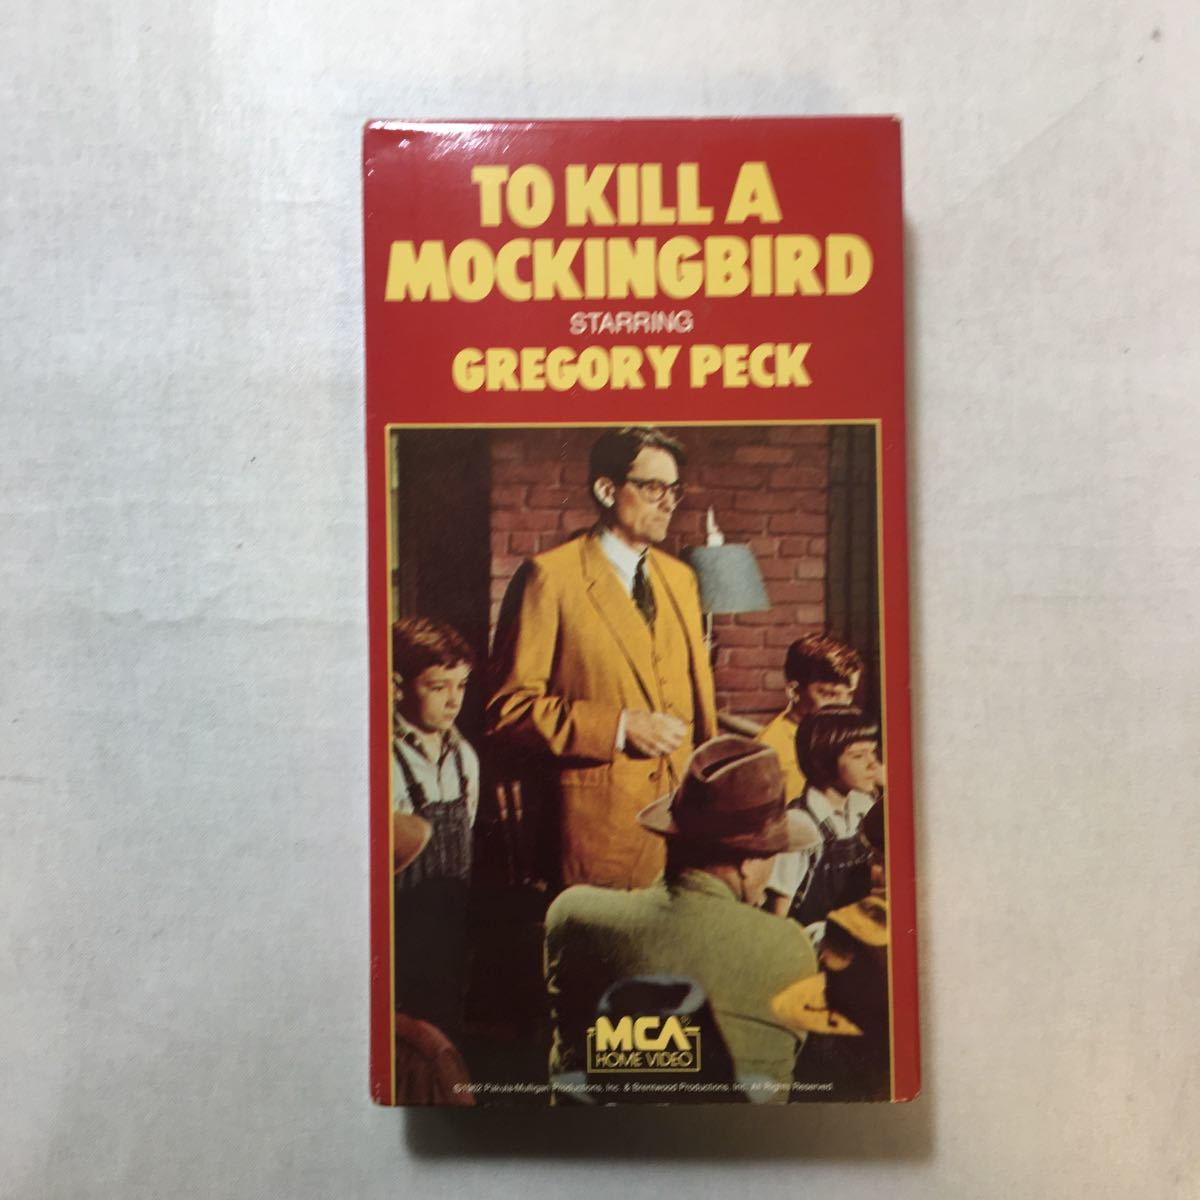 zaa-zvd09!To Kill a Mockingbird Gregory Peck ( performance ) ( import version ) [VHS] video 1998/2/24 129 minute 